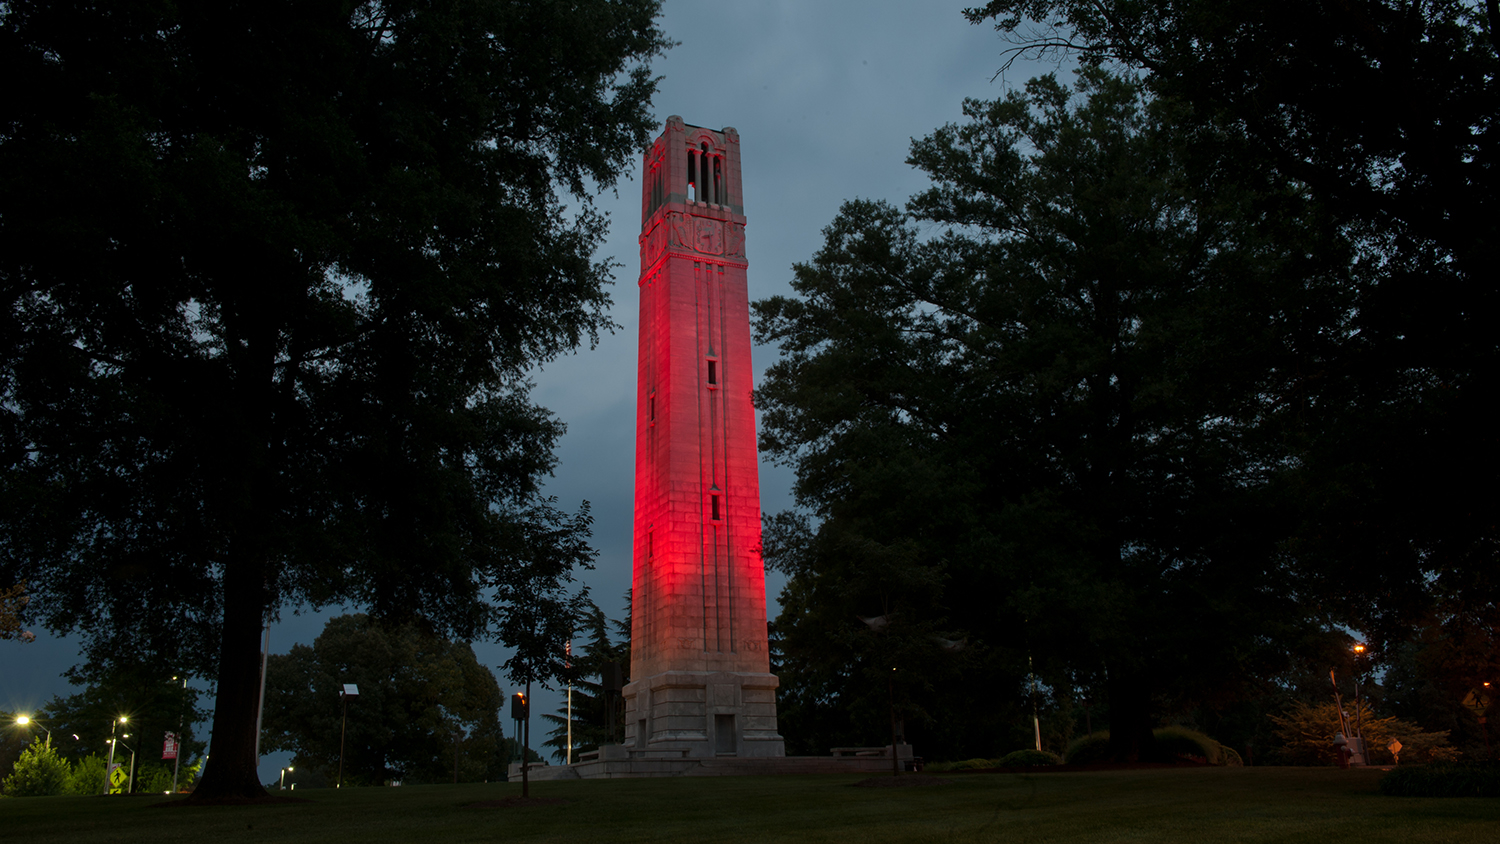 Belltower illuminated in red